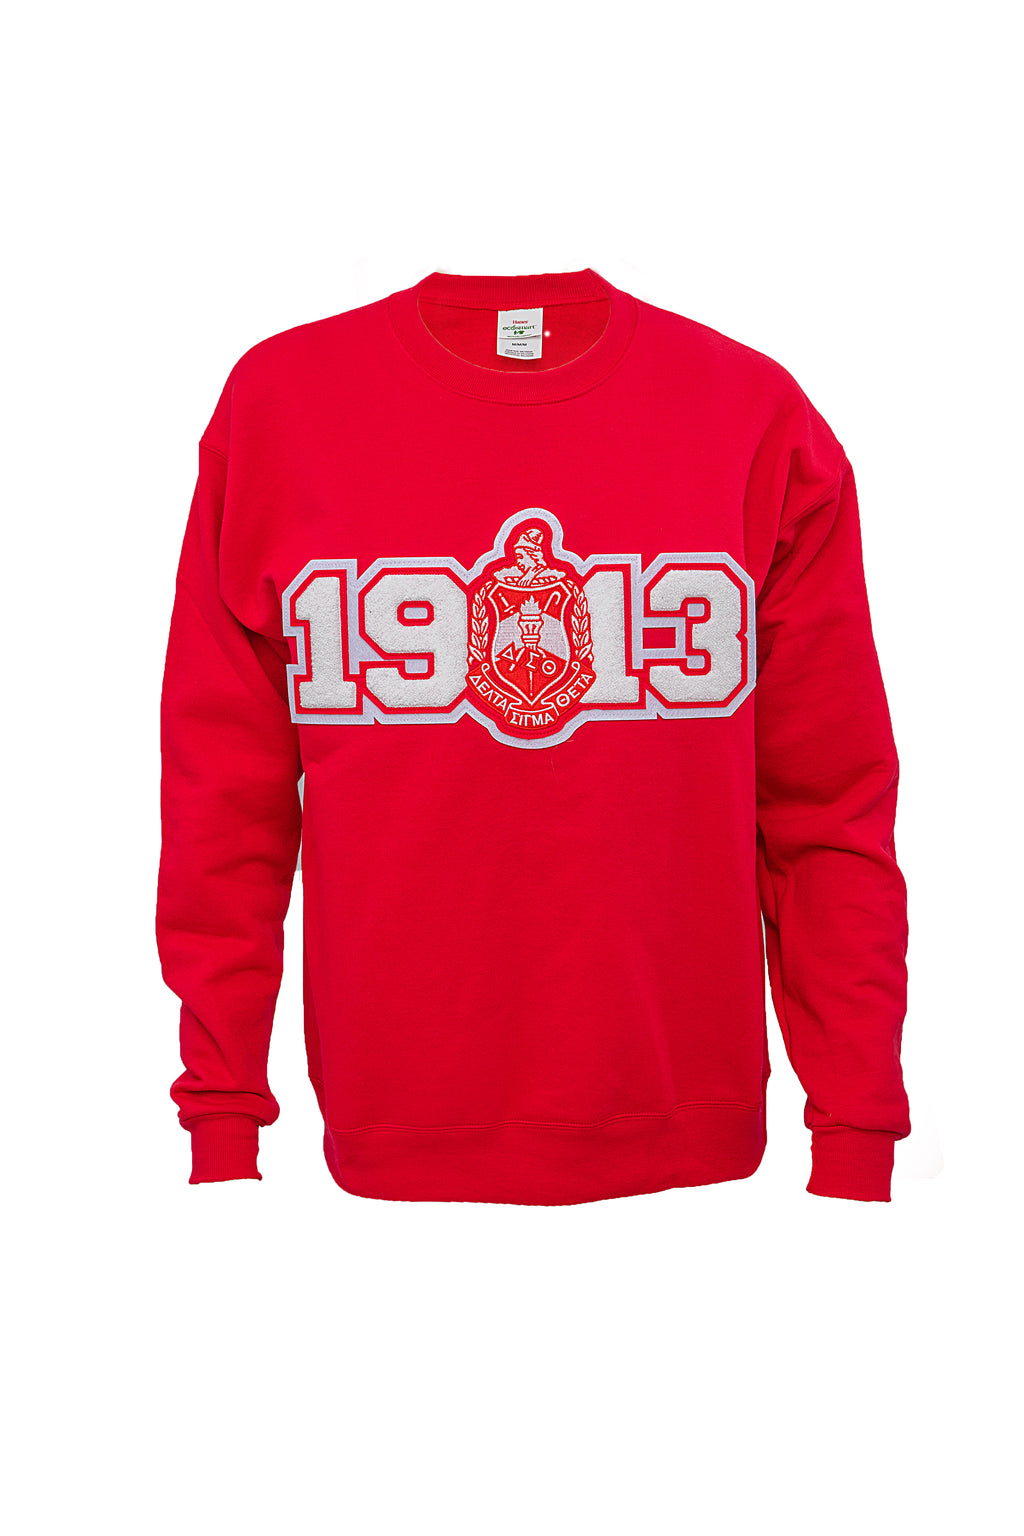 Delta Red Sweatshirt with White 1913 Chenille